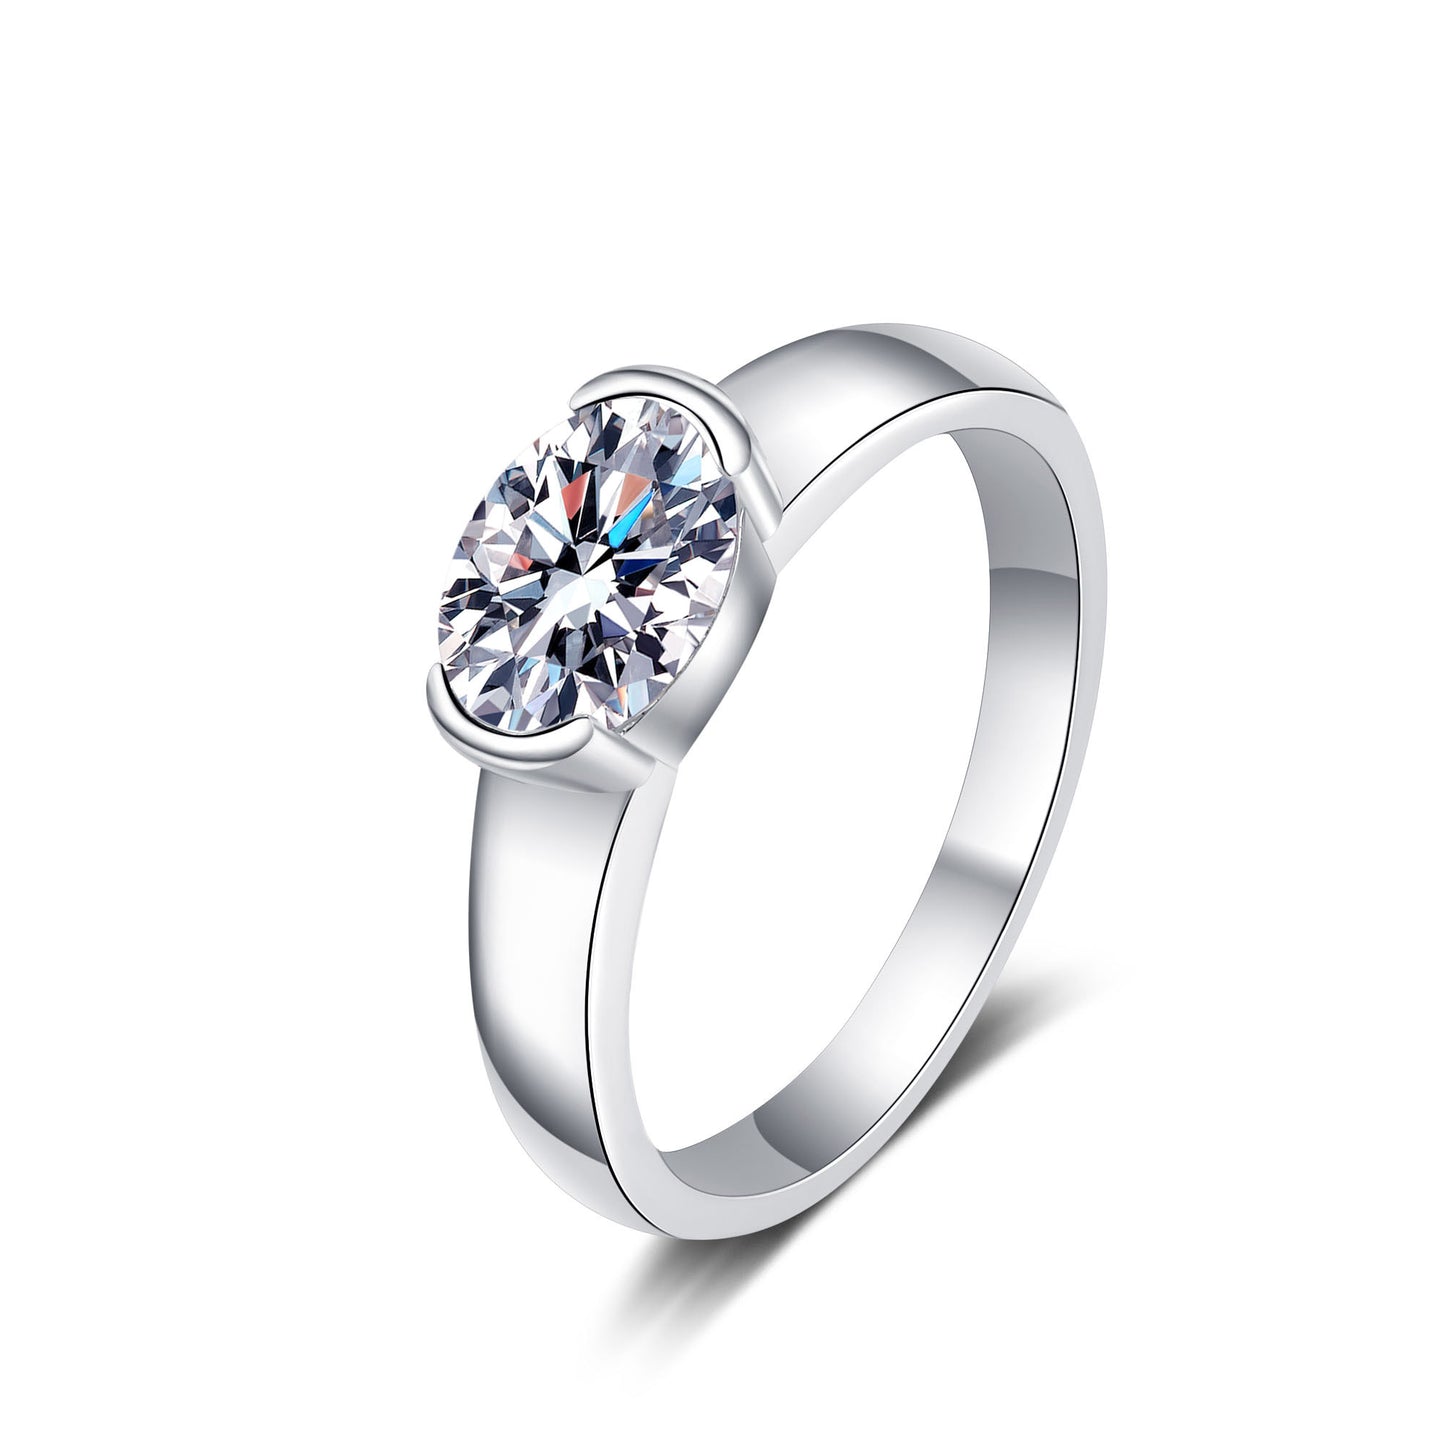 Half-Bezel Set Oval Cut Solitaire 1.5 Carat Moissanite Diamond Platinum Plated S925 Engagement Ring